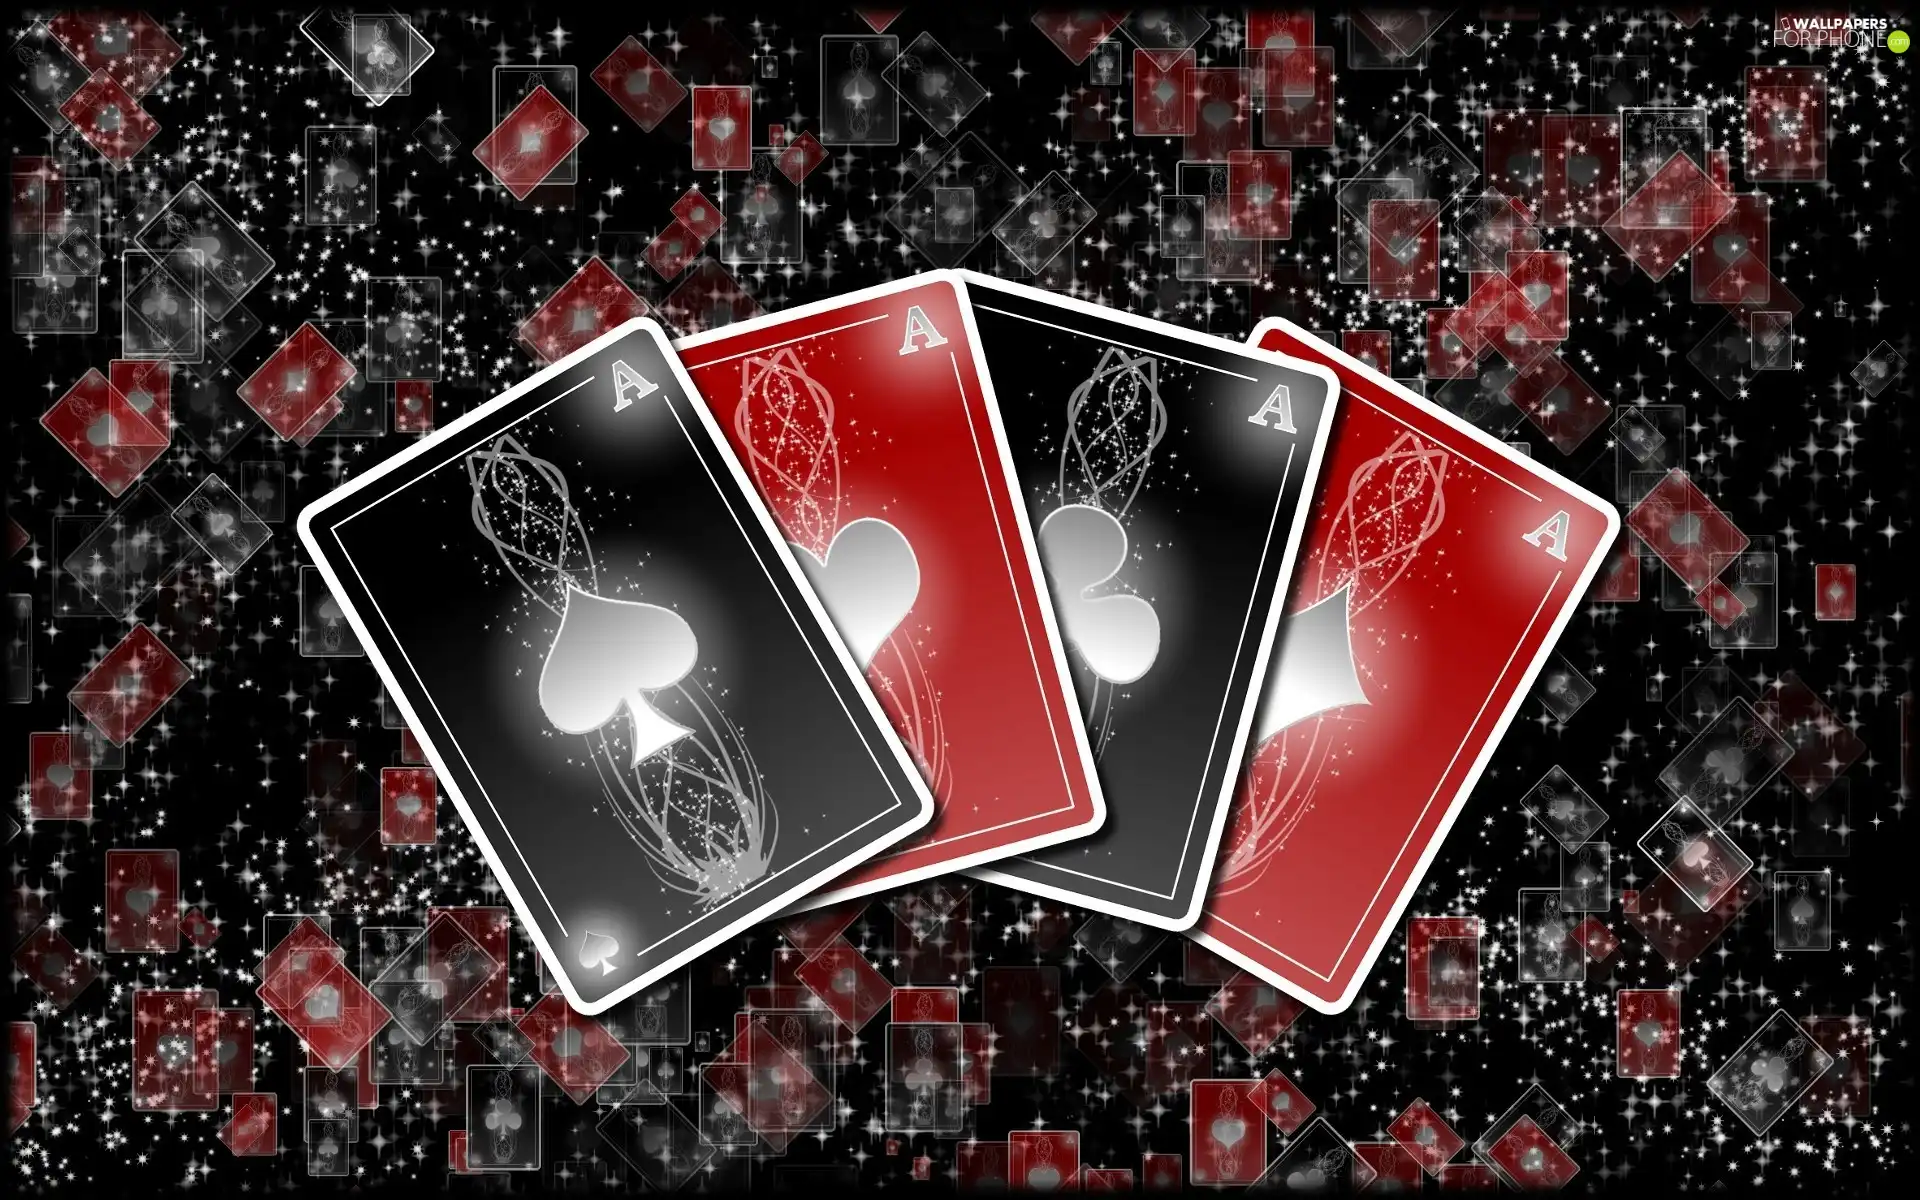 aces, Cards, four